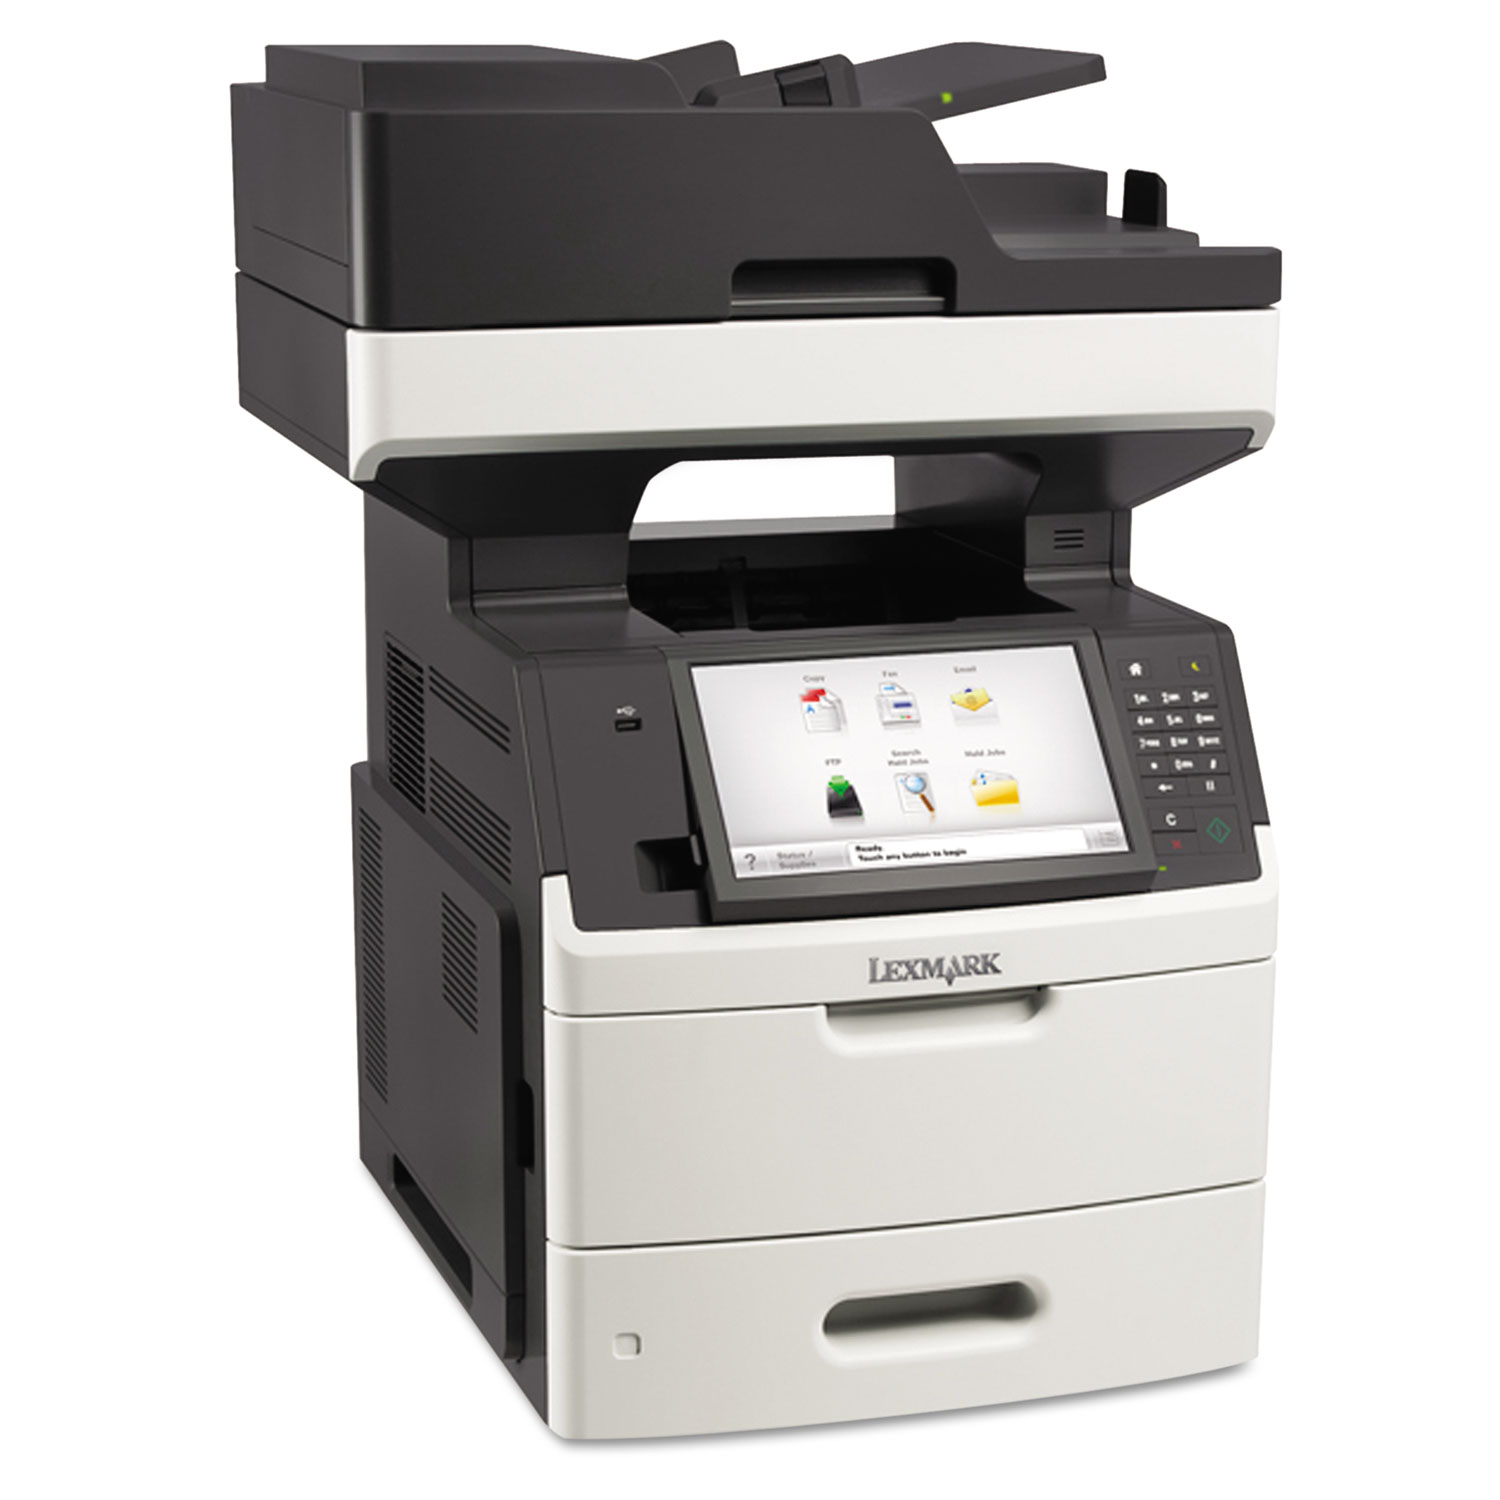 MX711dhe Multifunction Laser Printer, Copy/Fax/Print/Scan